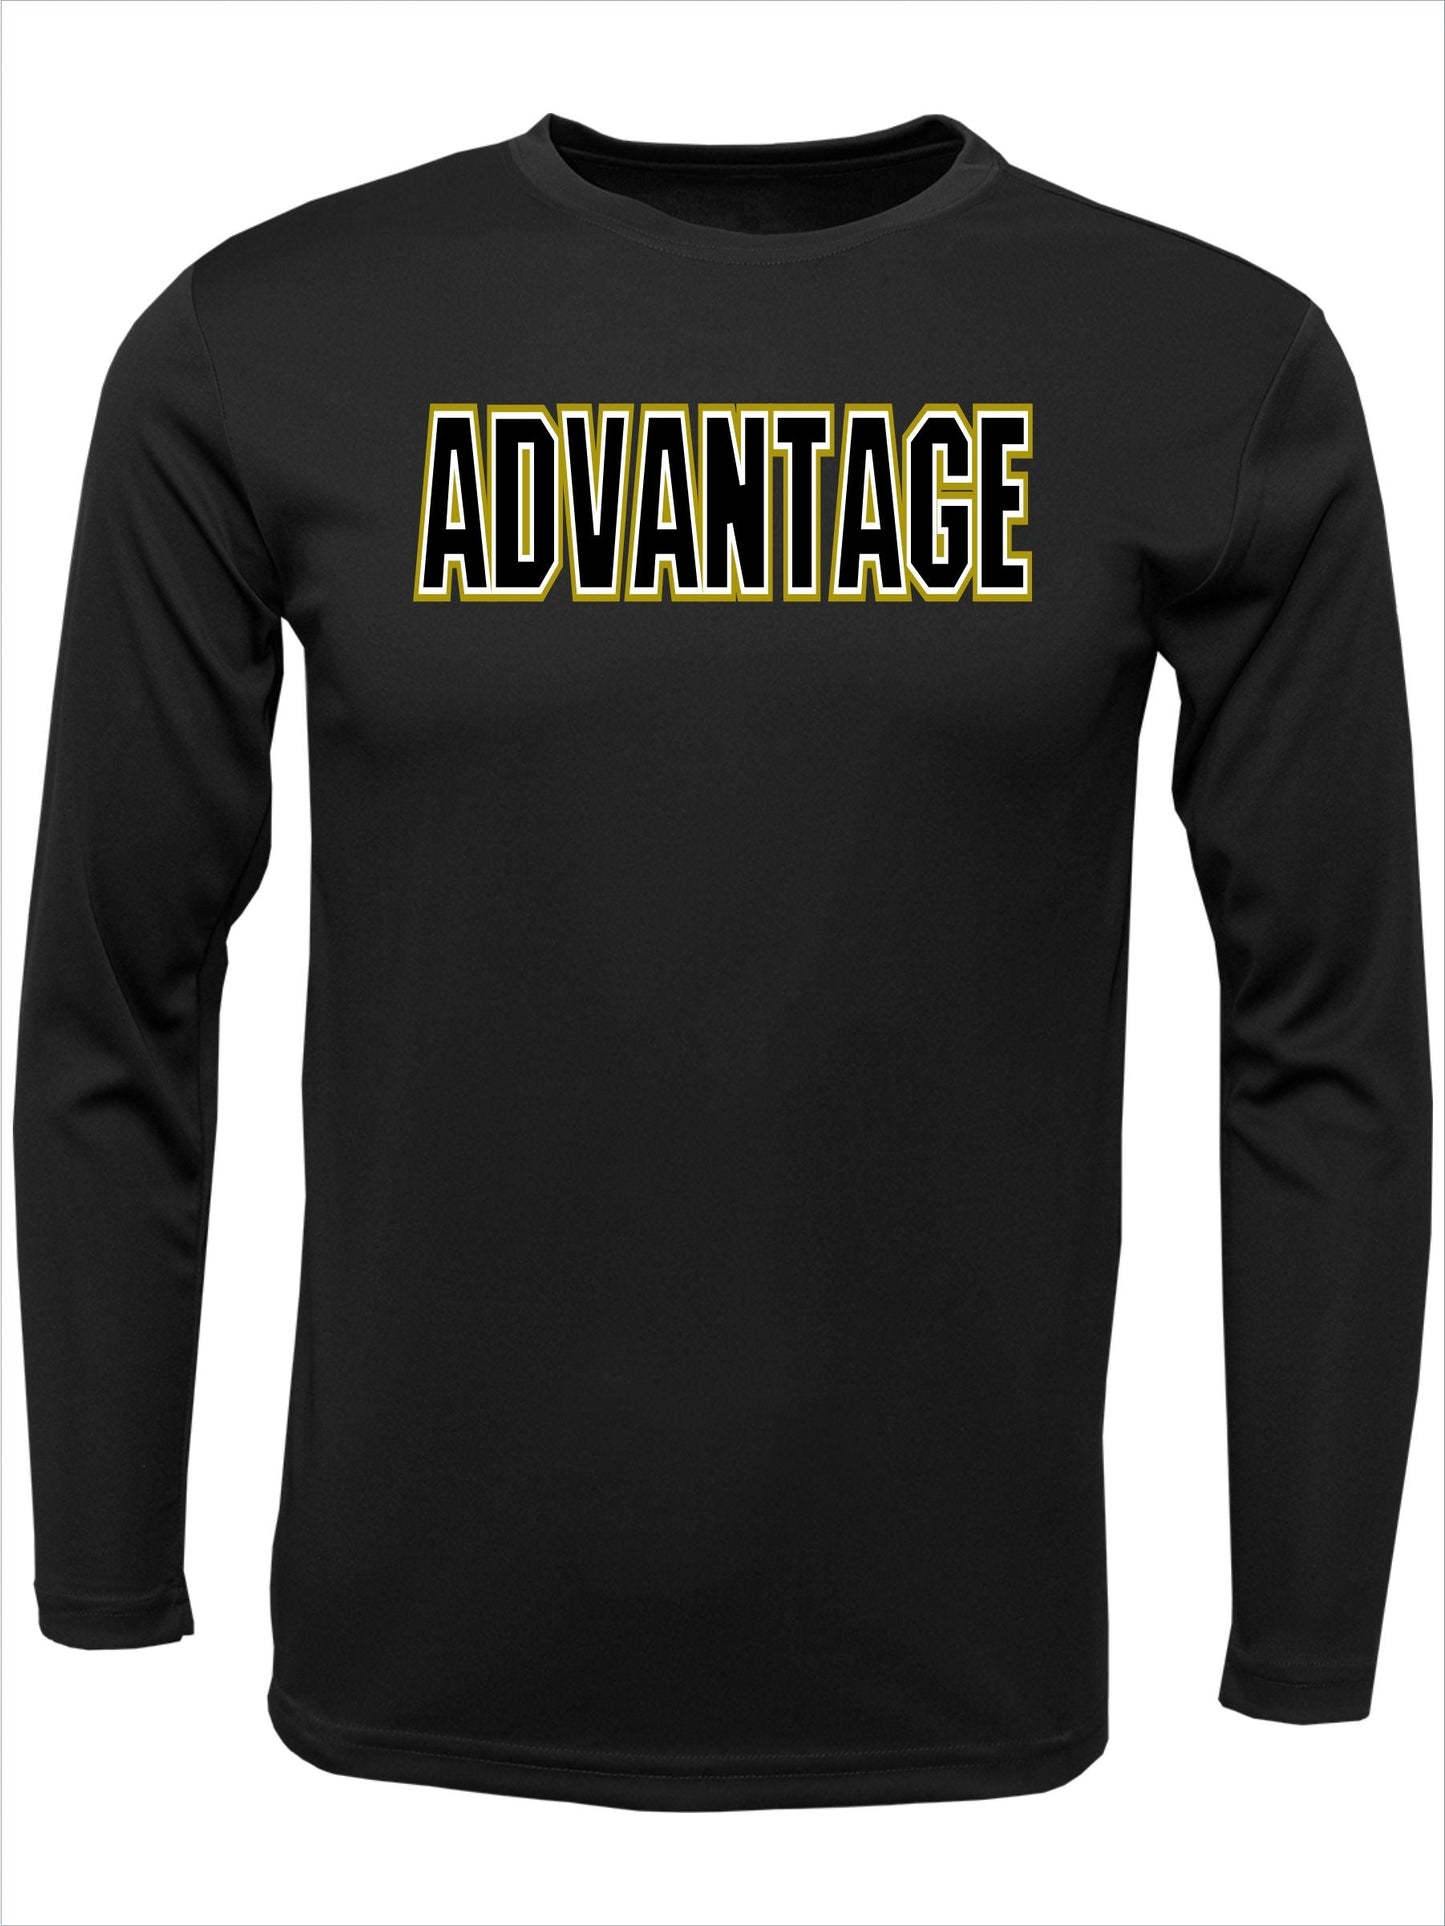 Long Sleeve "Advantage" Cotton T-Shirt